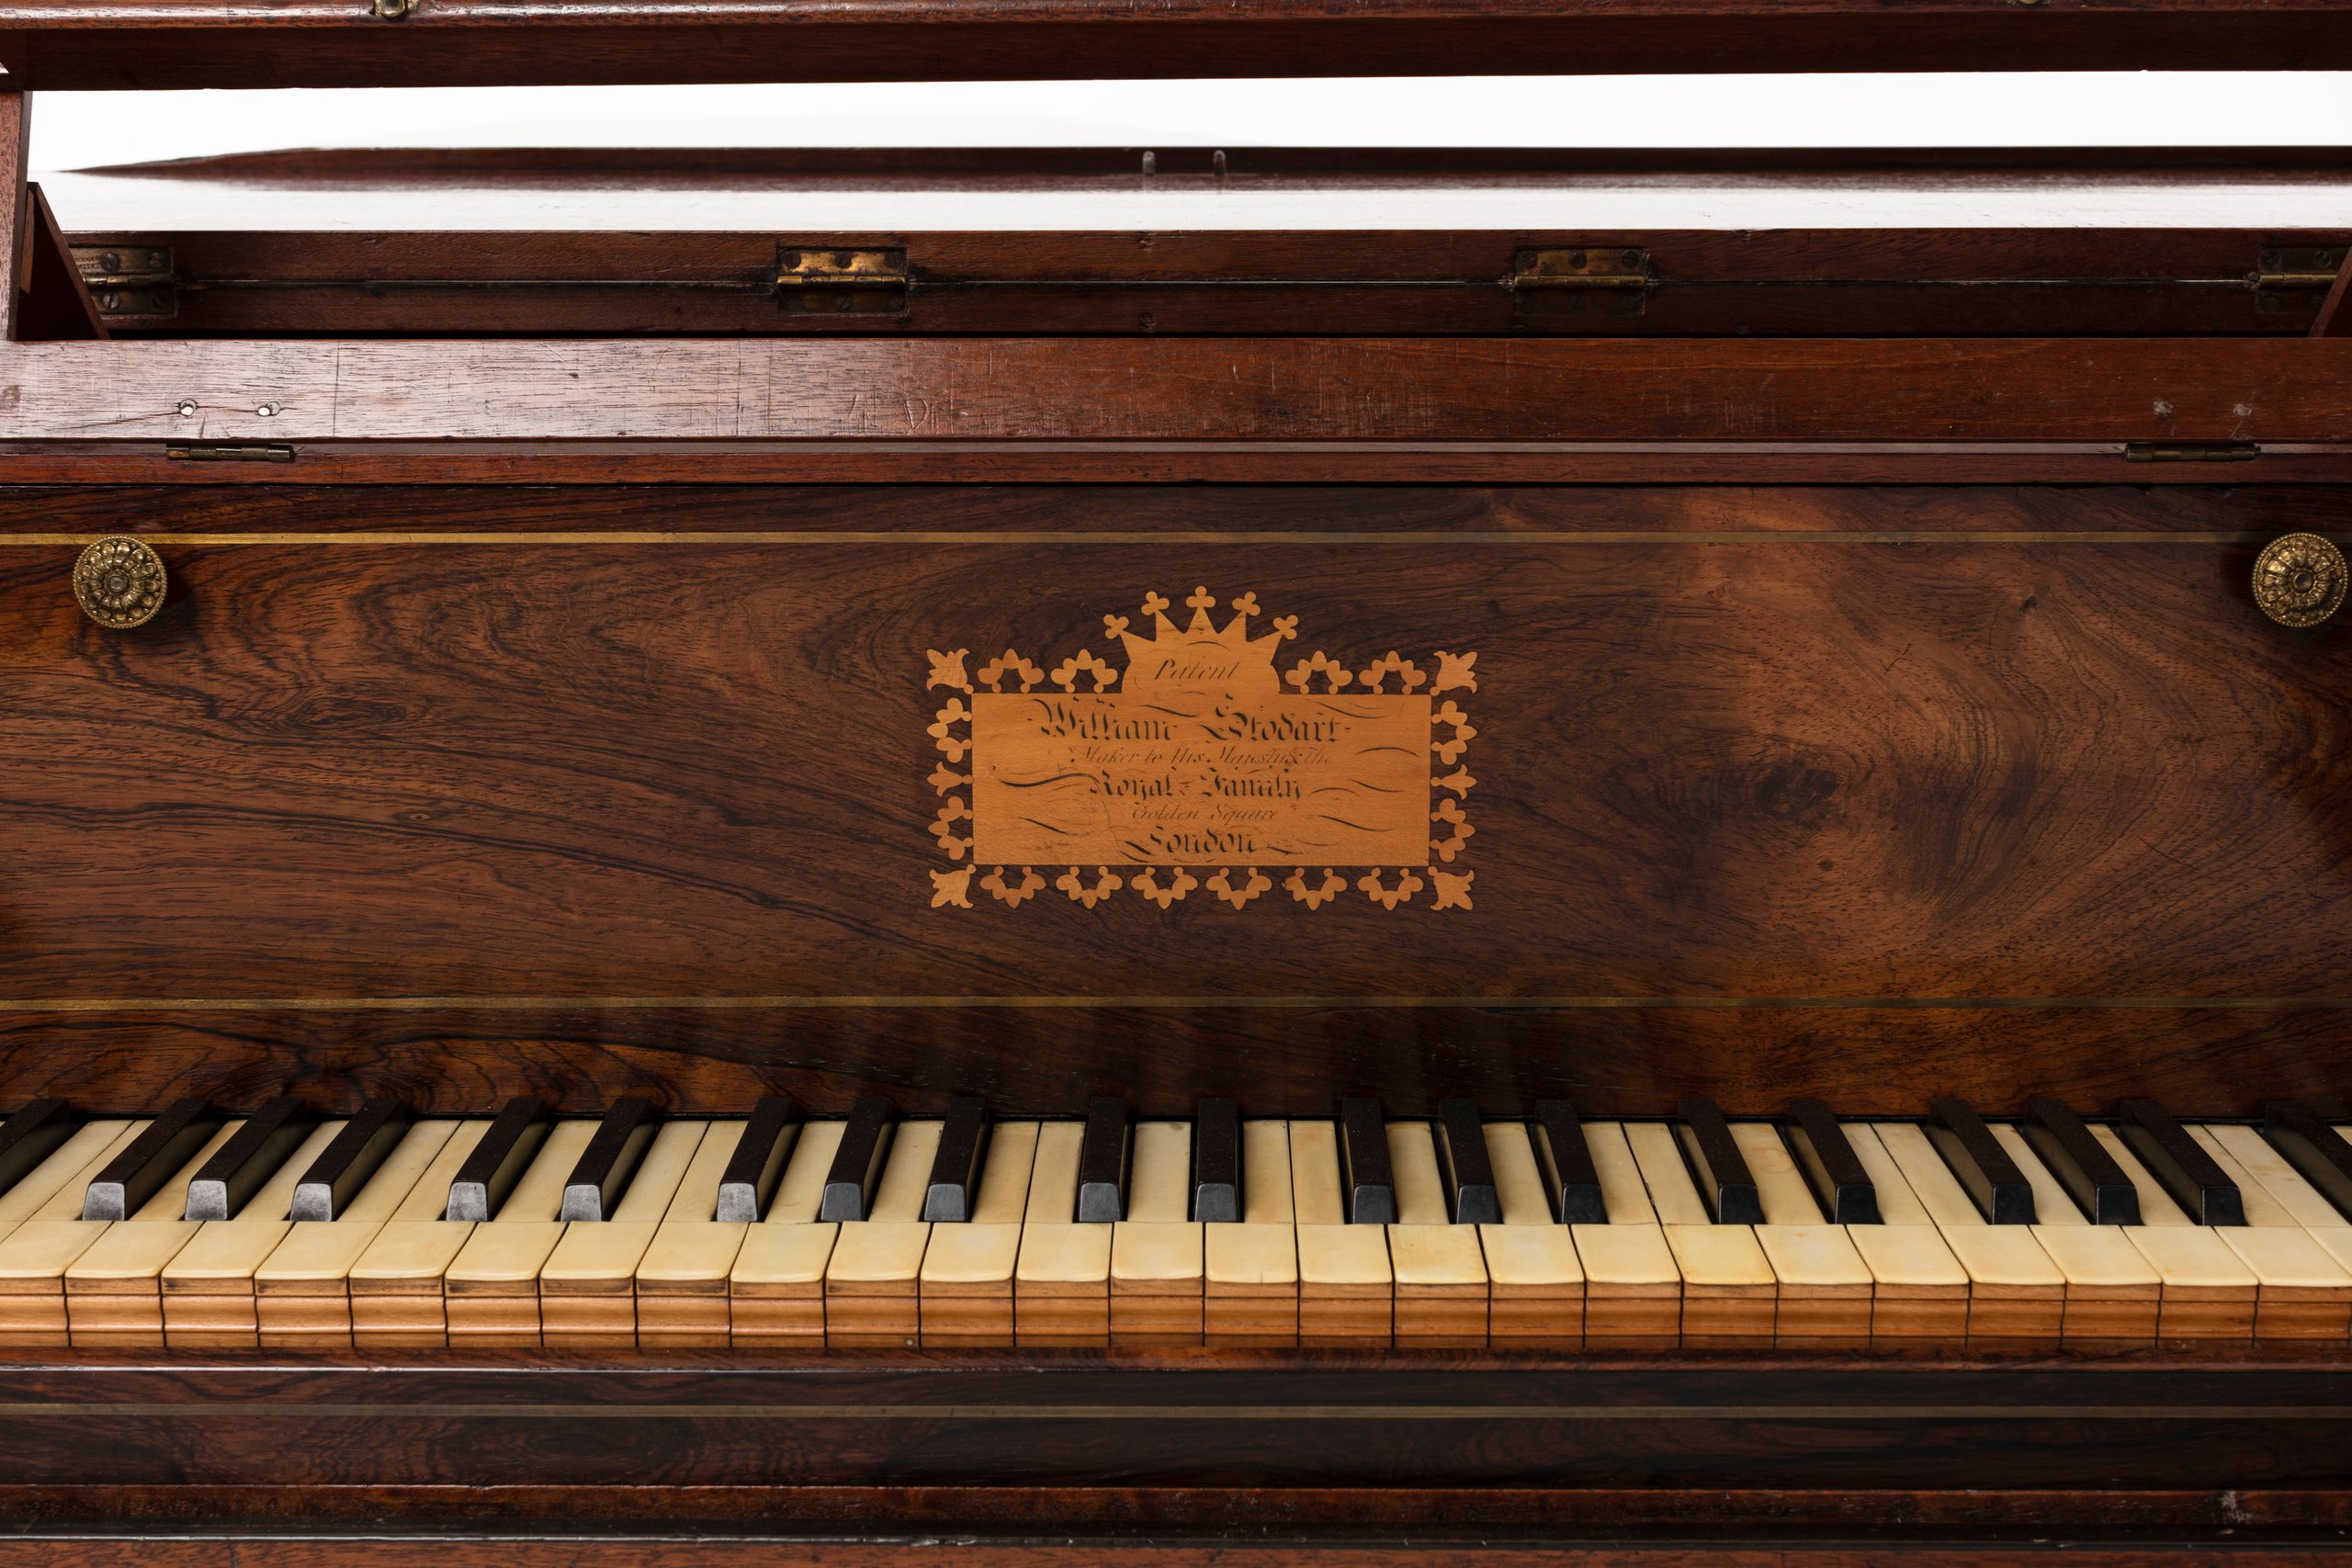 Grand piano made by William Stodart